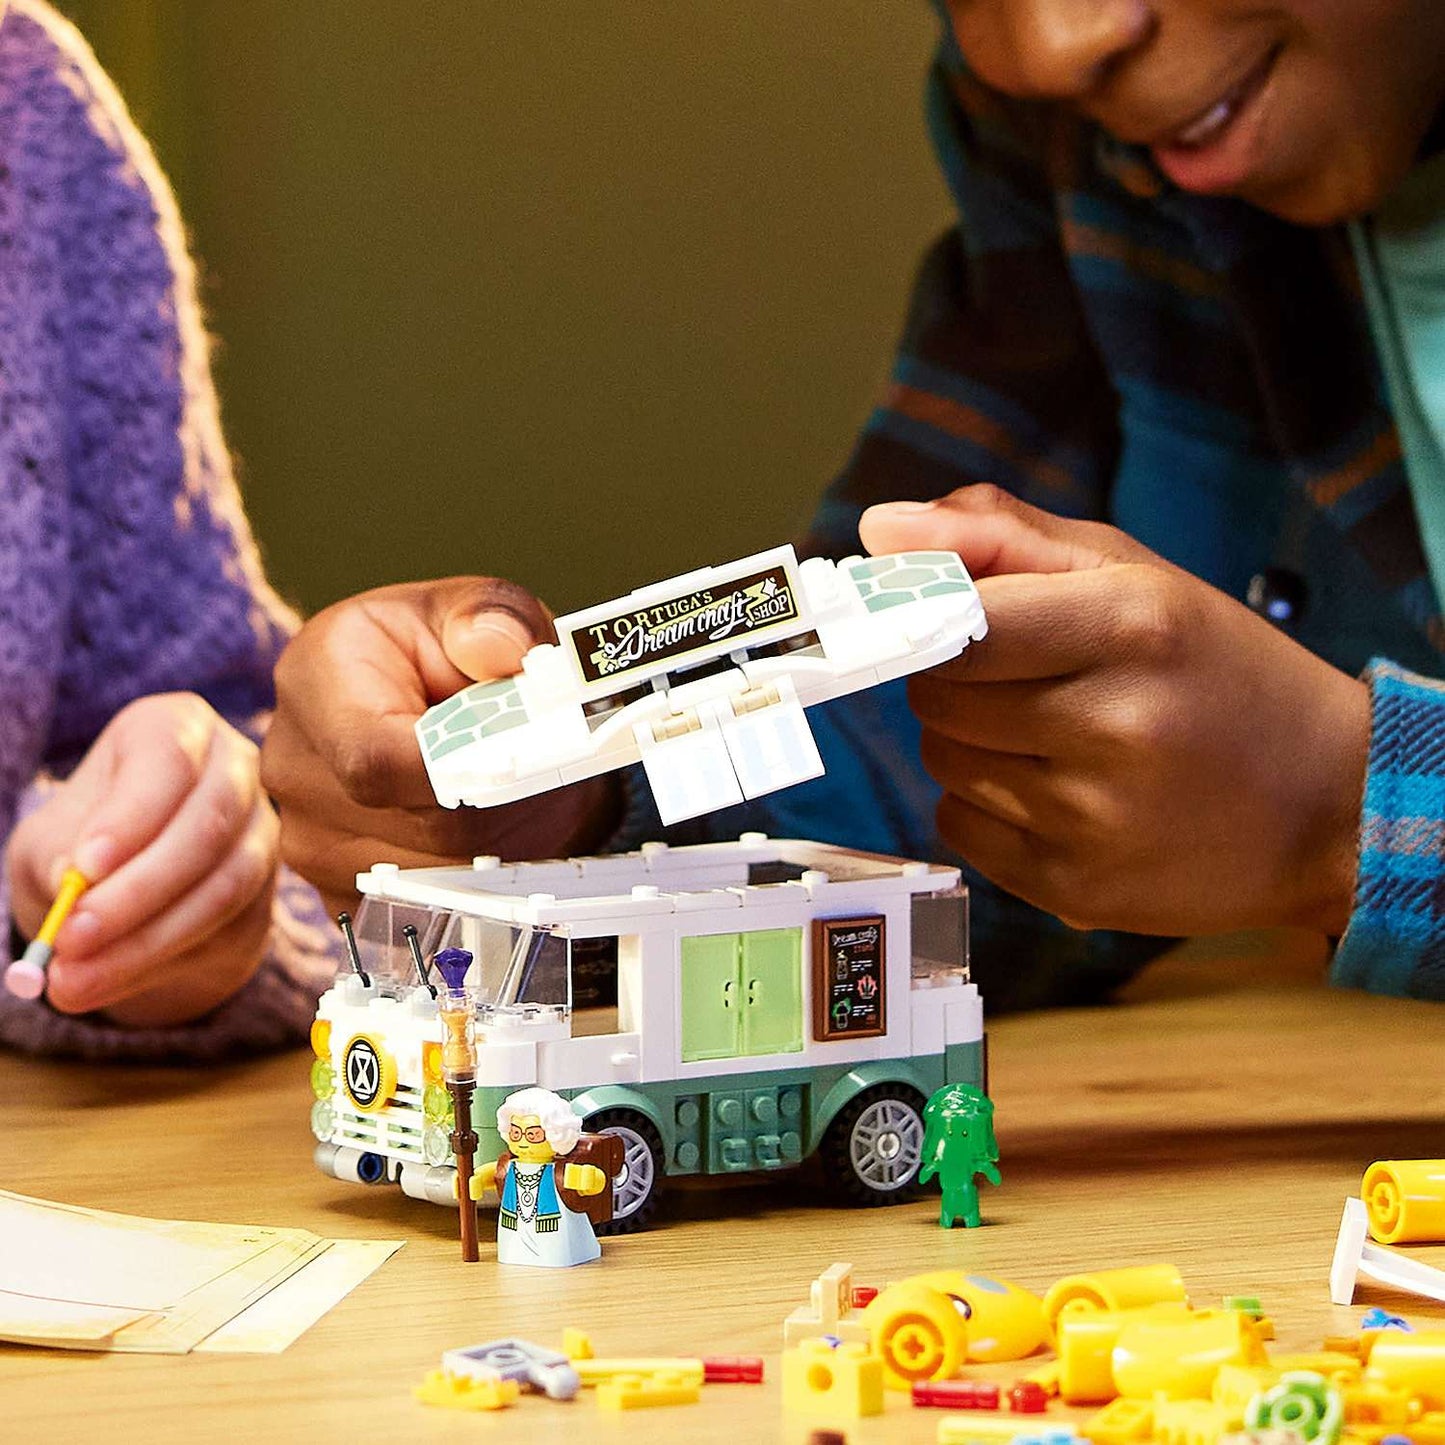 LEGO® DREAMZzz Mrs. Castillo's Turtle Van 2-in-1 Building Toy 71456 (434 Pieces)